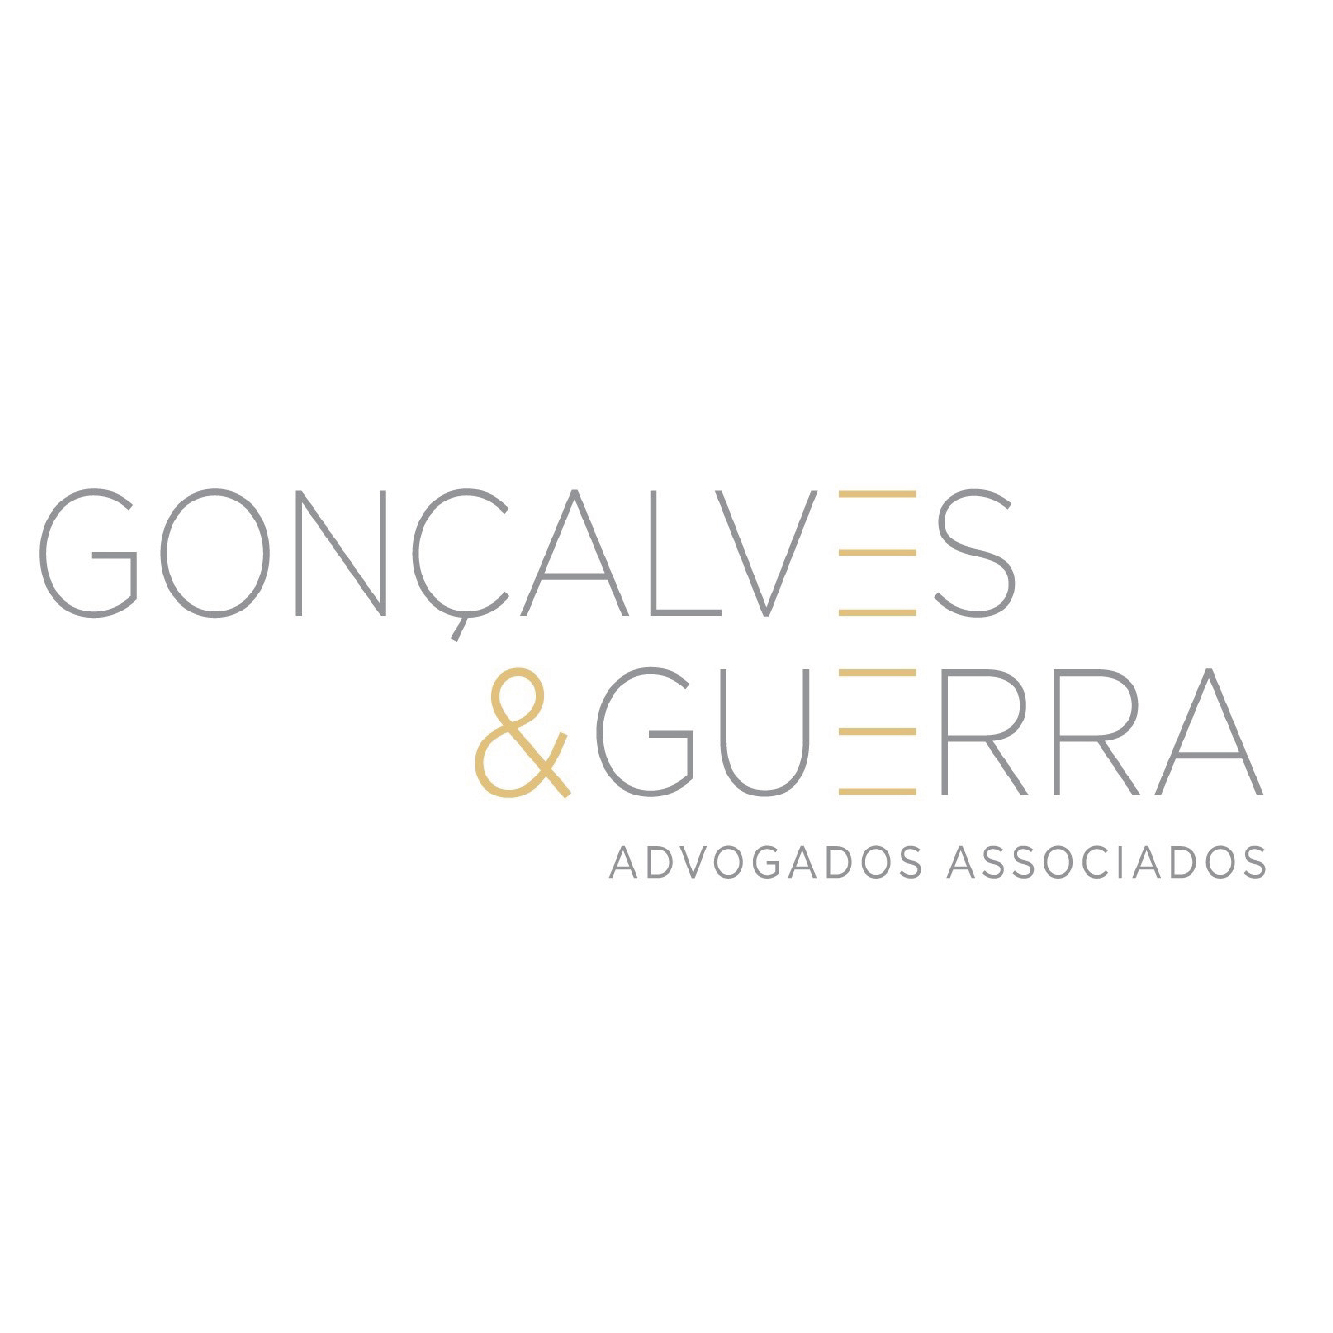 GONÇALVES & GUERRA ADVOGADOS ASSOCIADOS